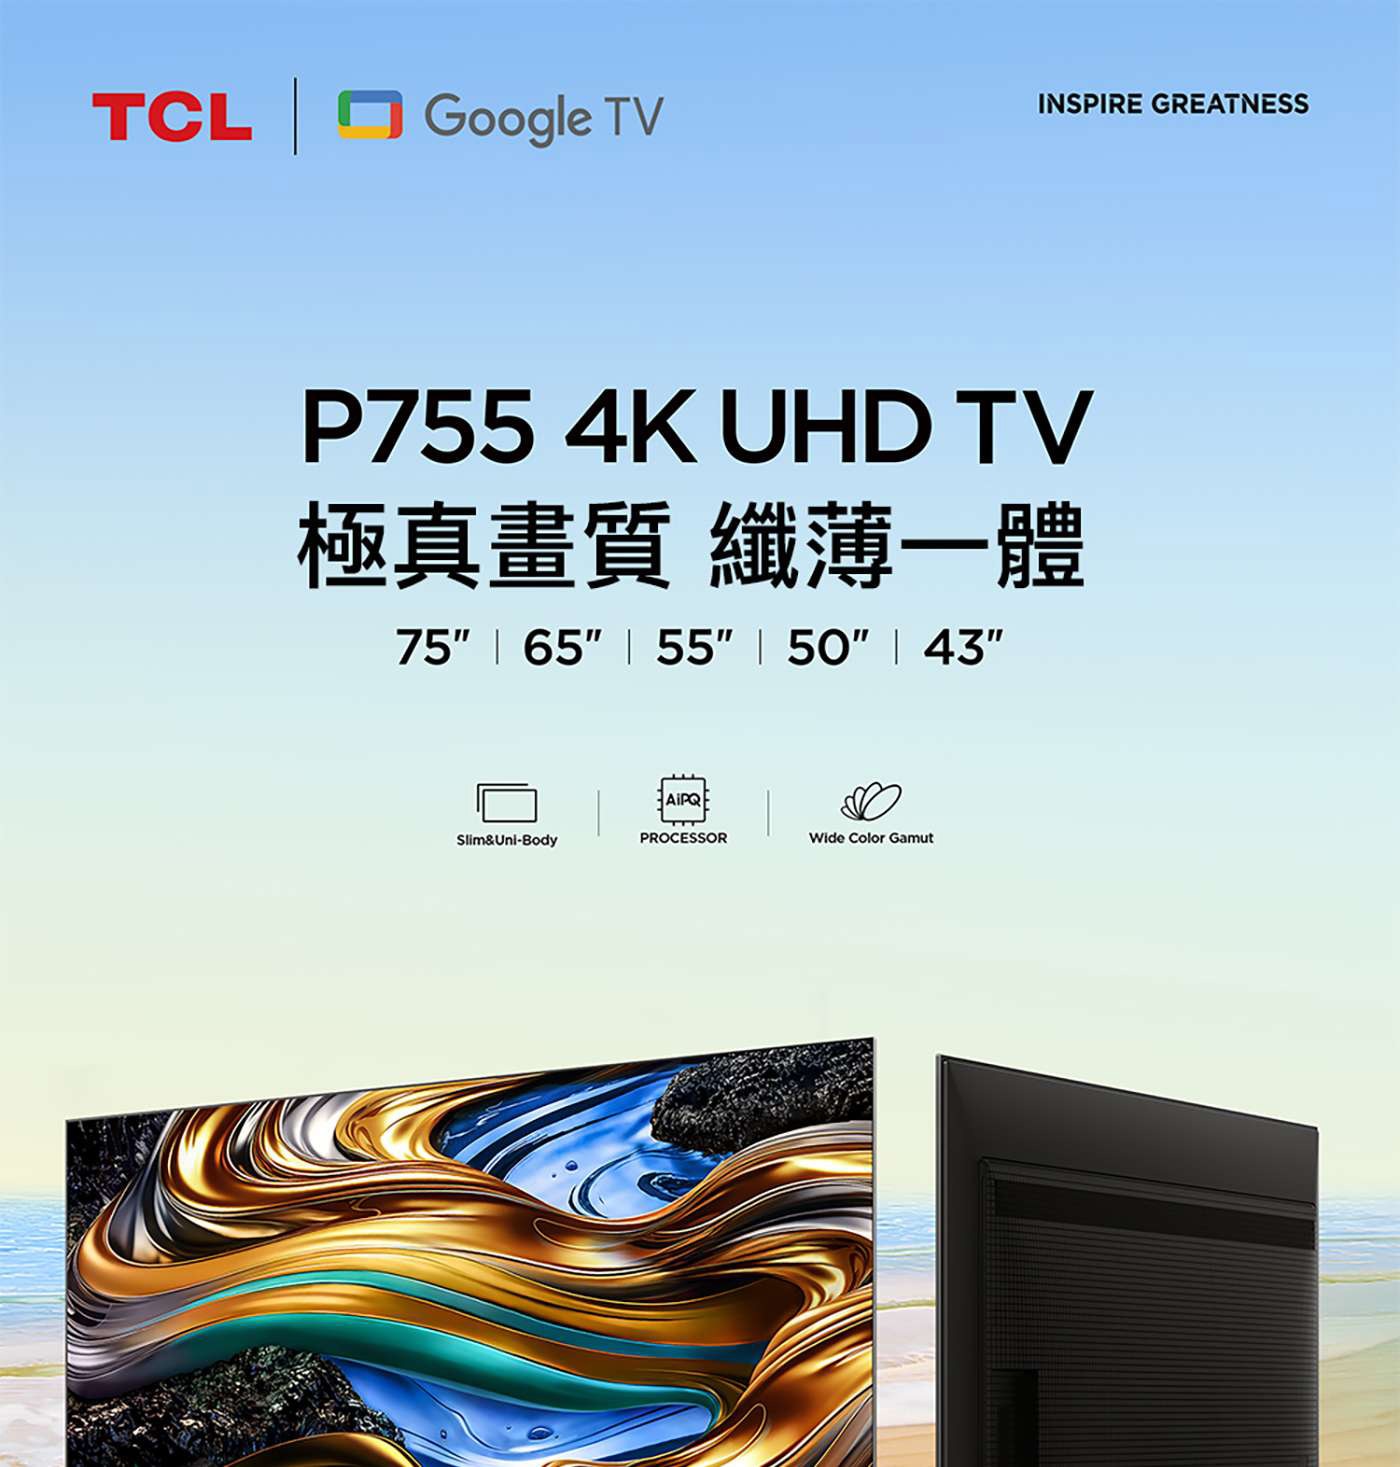 TCL 55吋 4K UHD Google TV 液晶顯示器 55P755